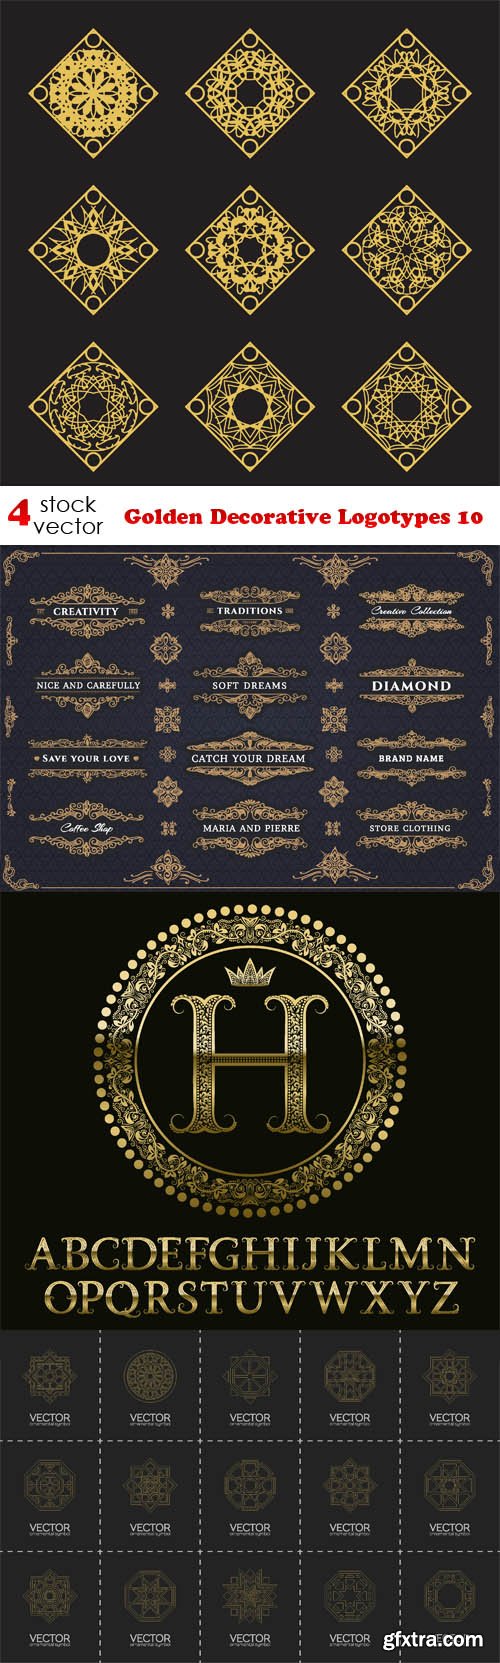 Vectors - Golden Decorative Logotypes 10